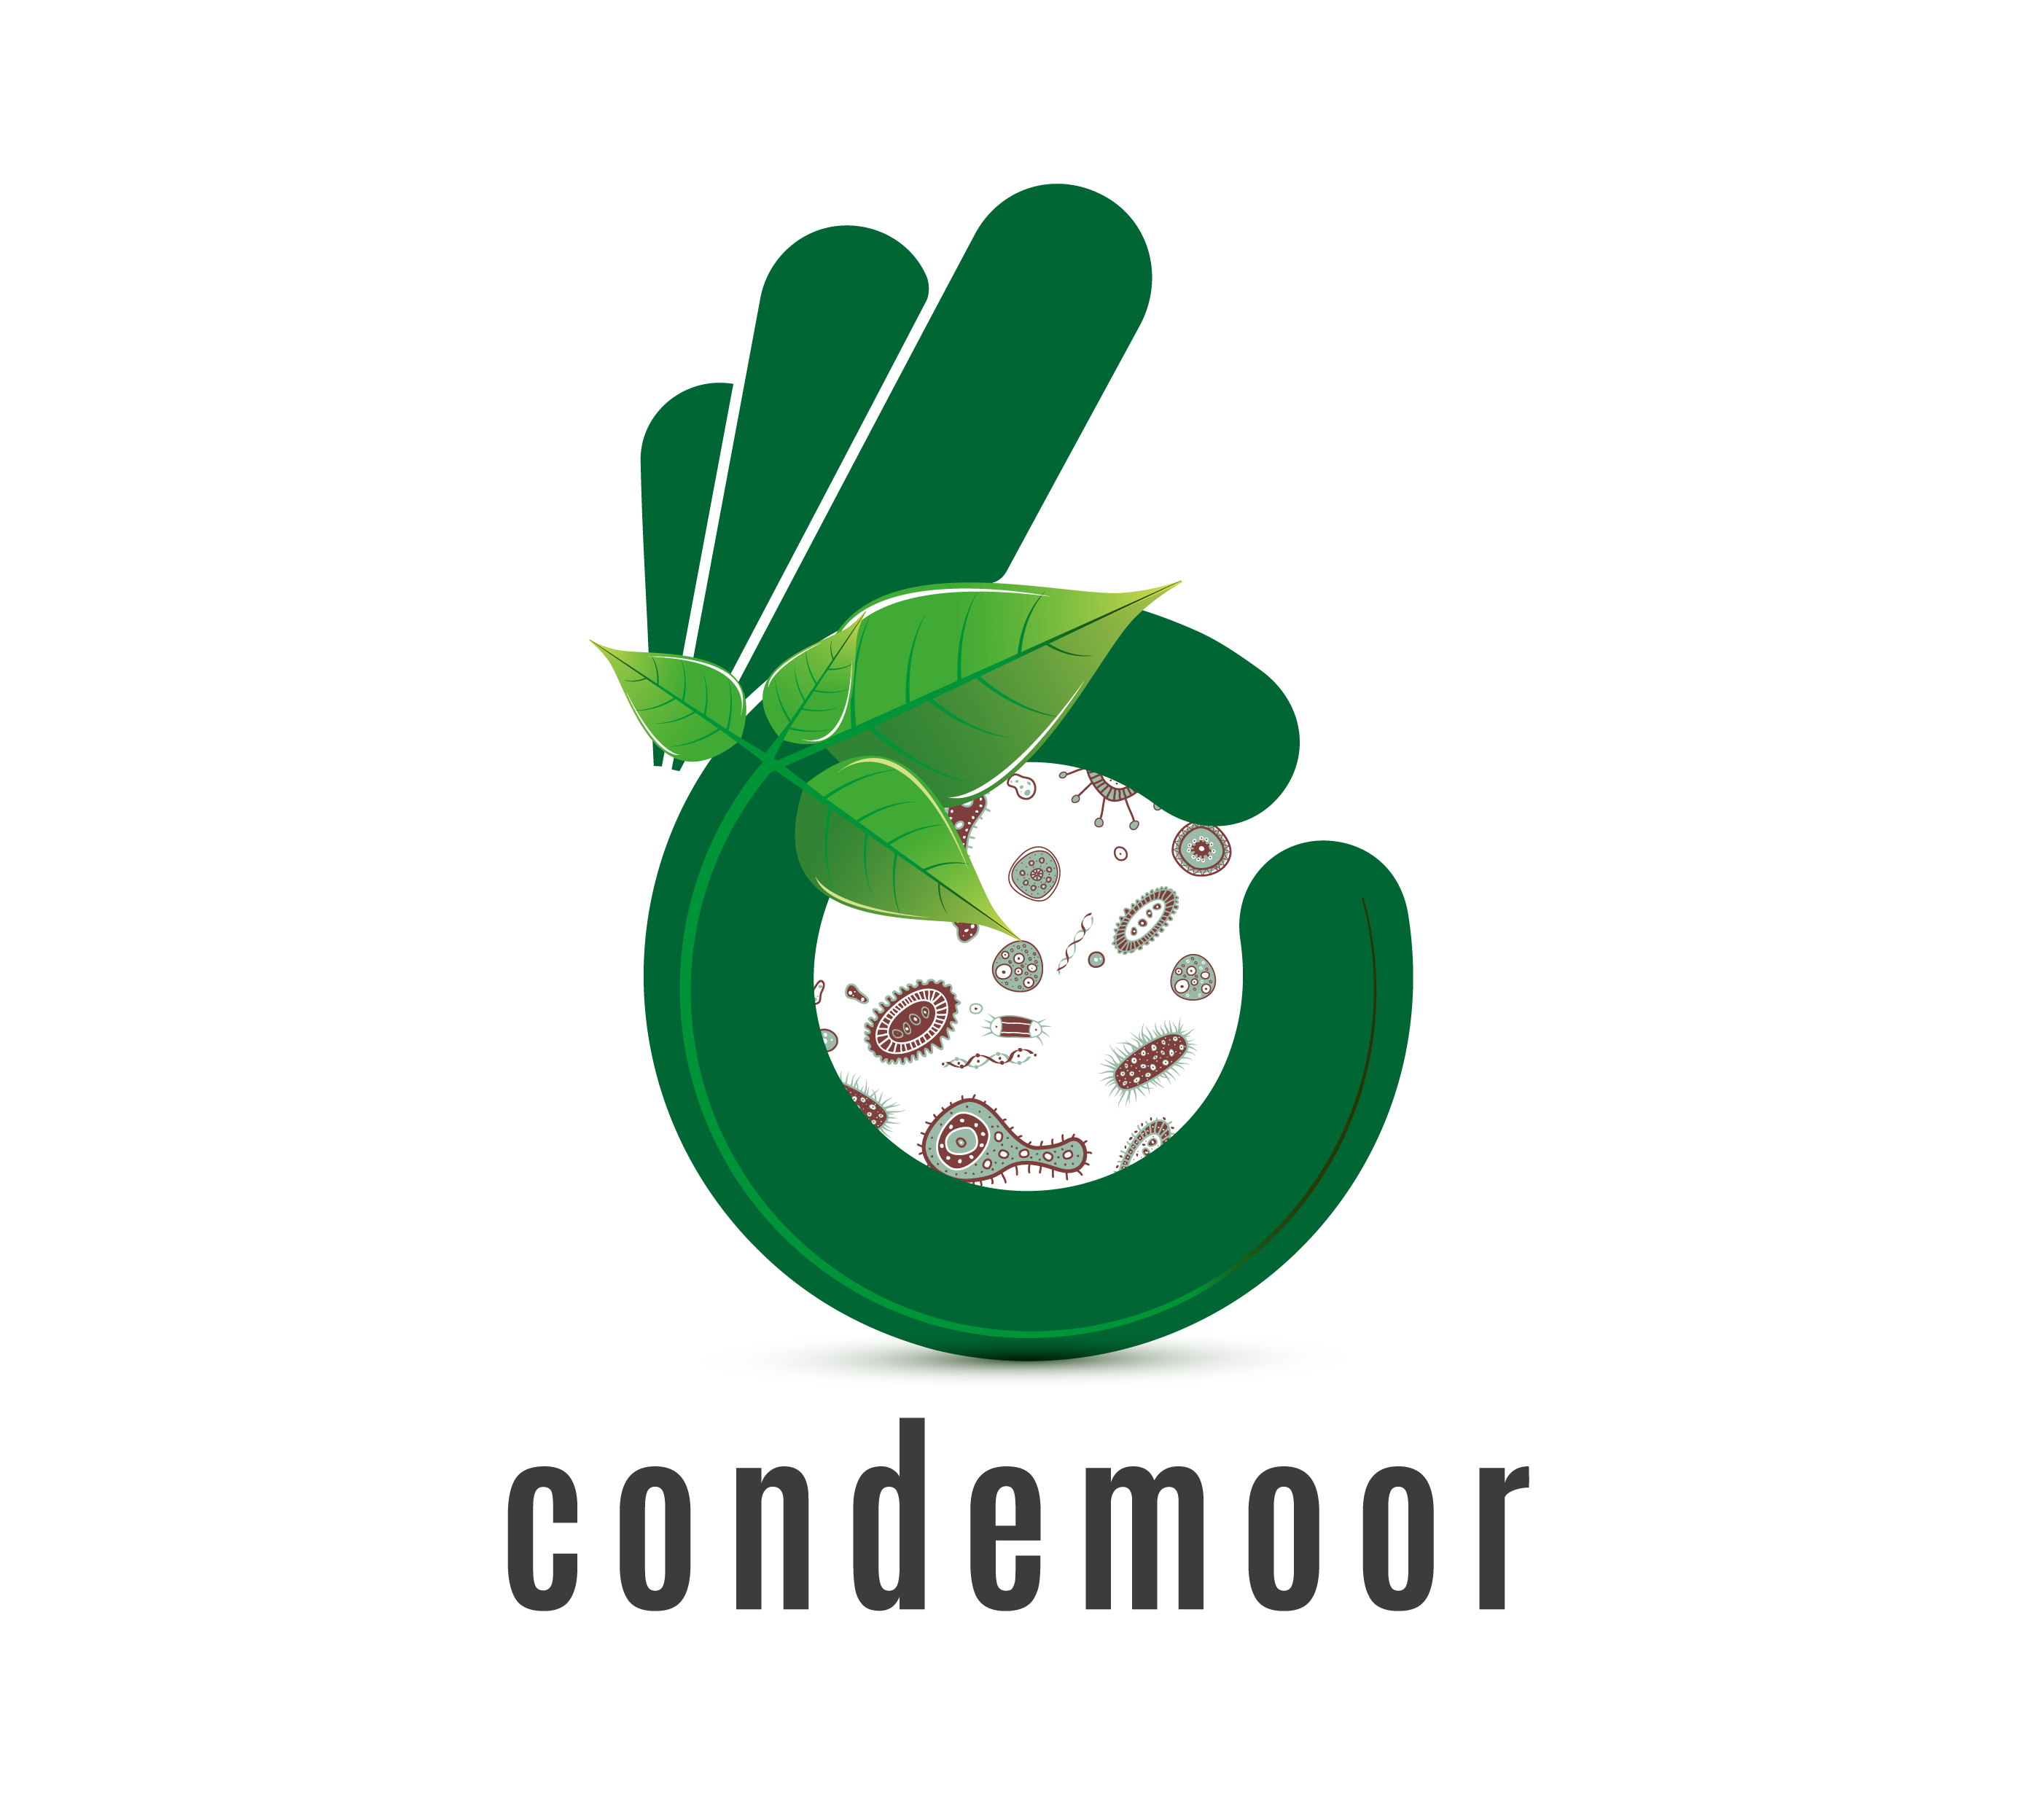 Condemoor